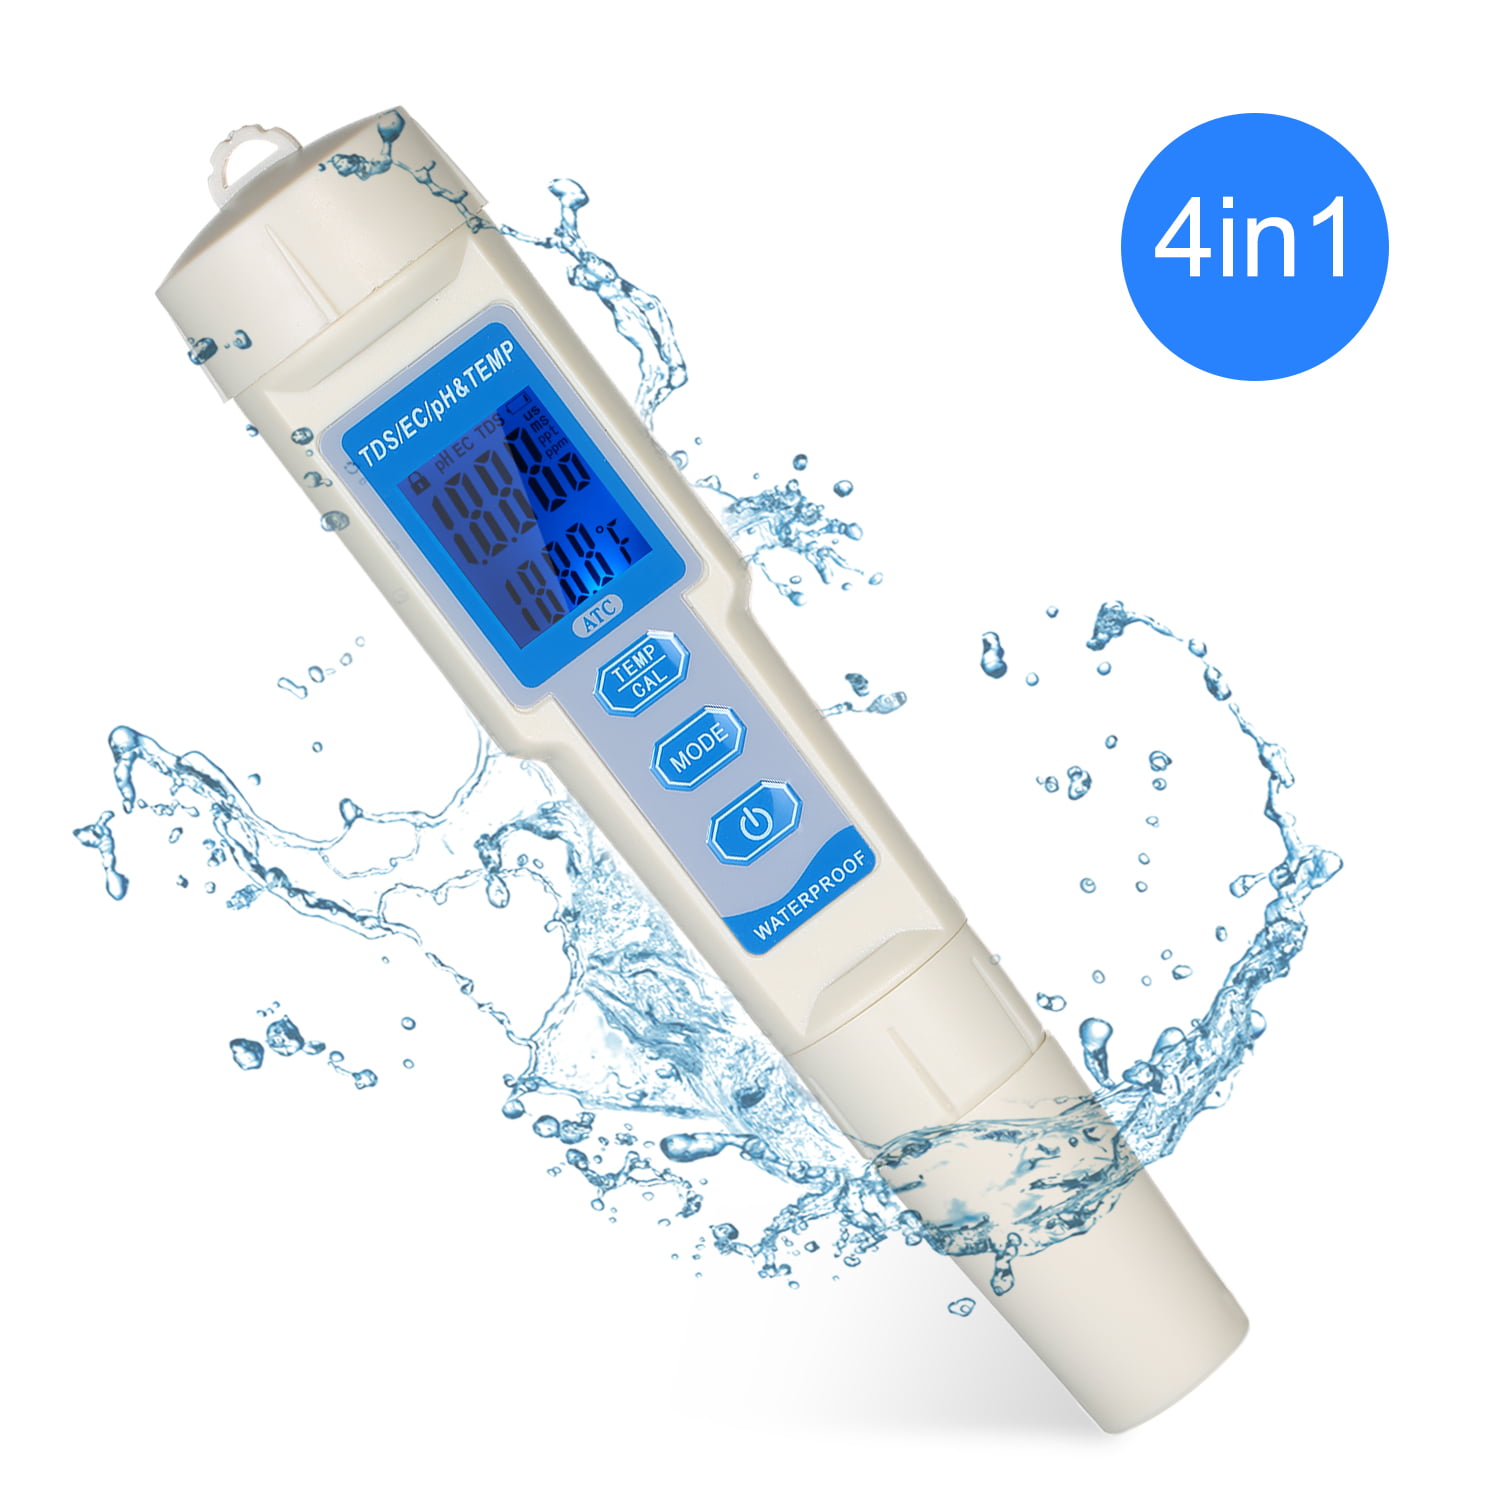 4in1 Digital LCD Water Quality Tester Pen PH/TDS/EC/TEMP Meter Detector Portable 